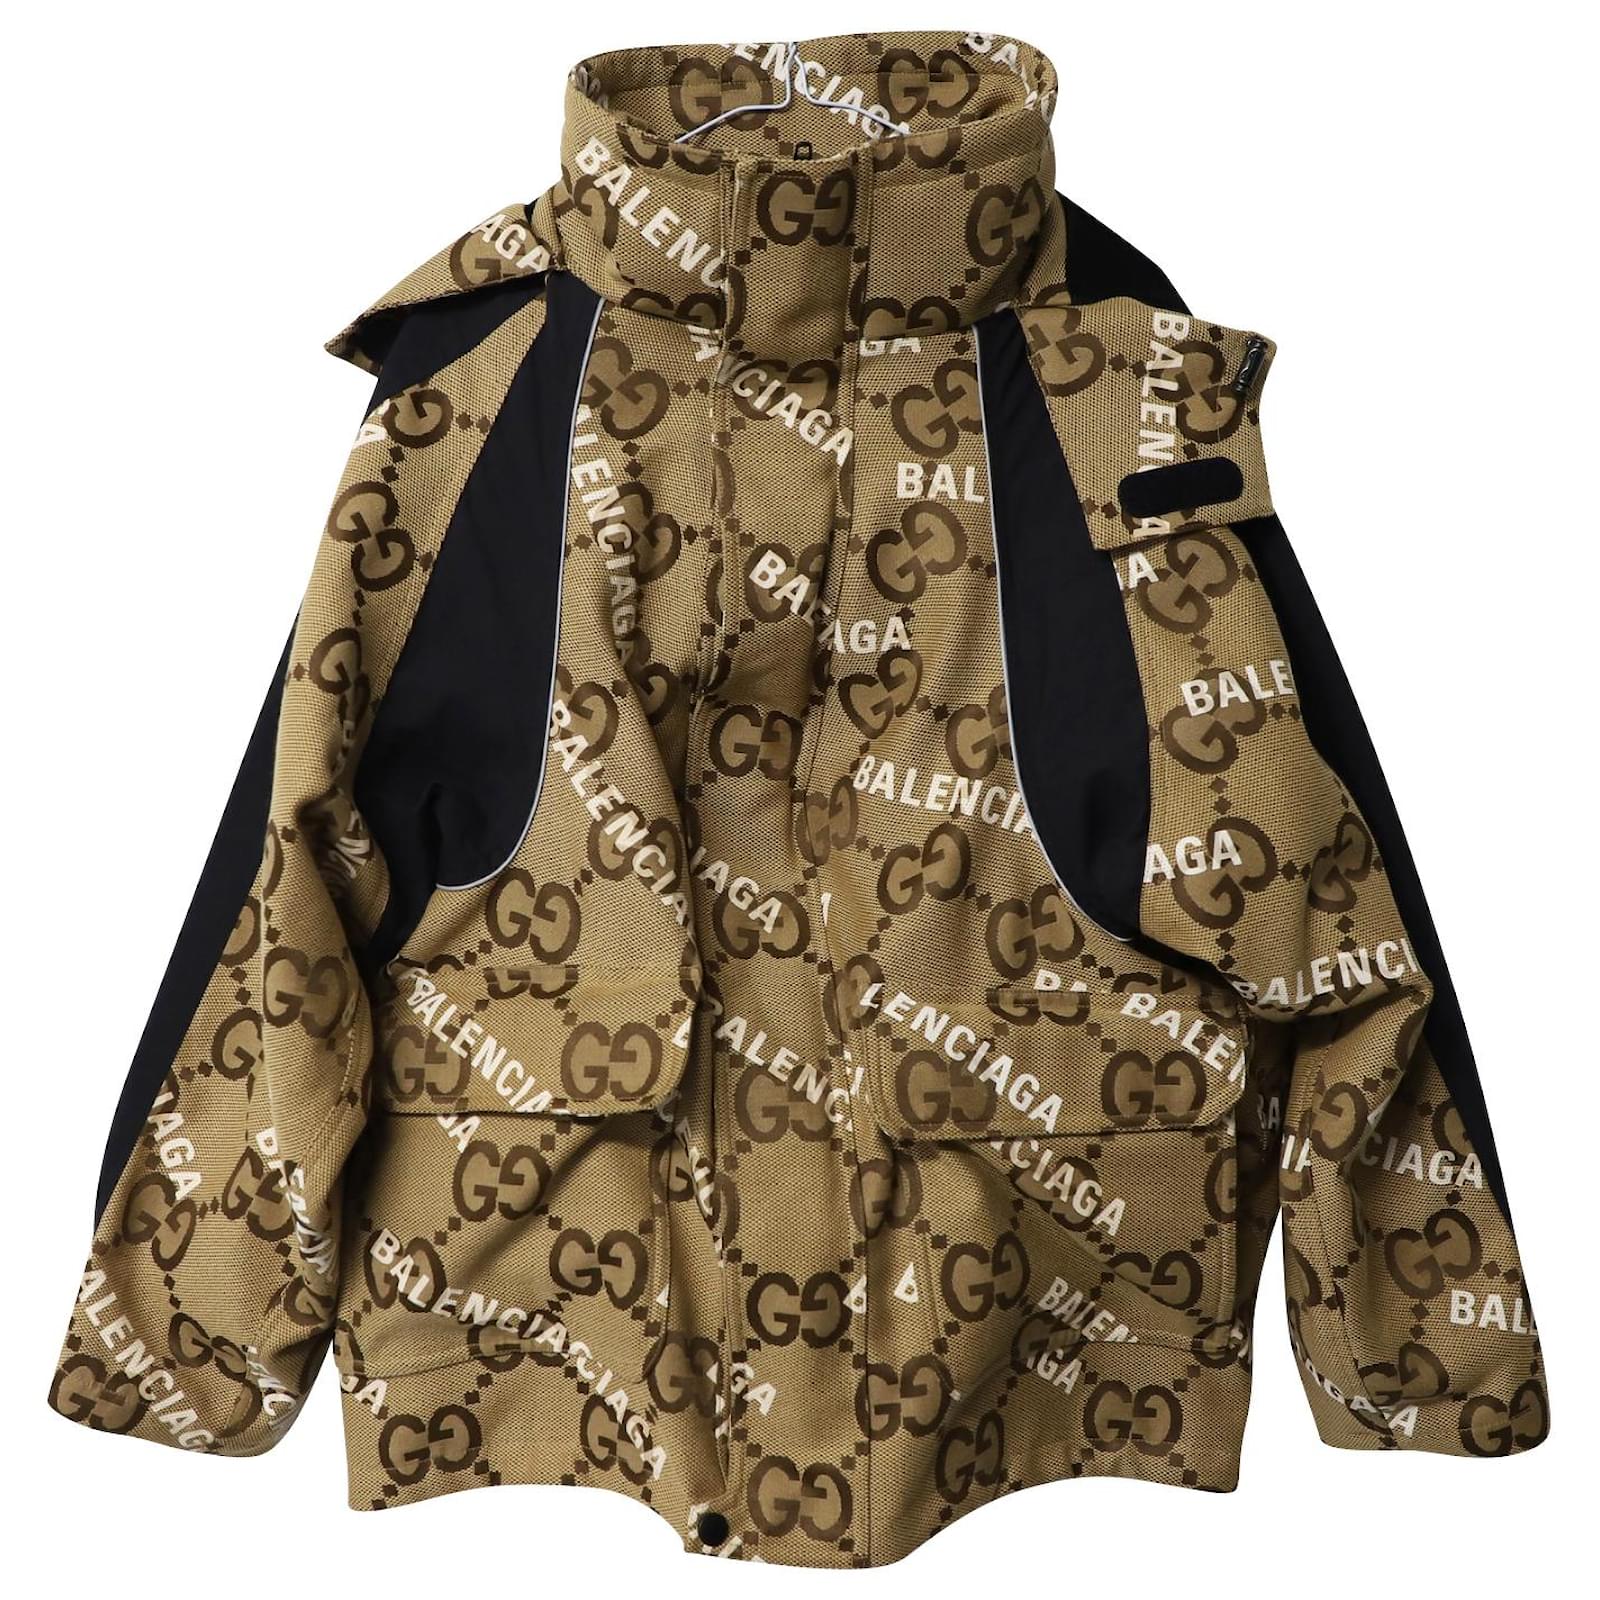 Gucci & Balenciaga The Hacker Project Jacket Beige/Ebony Size 42